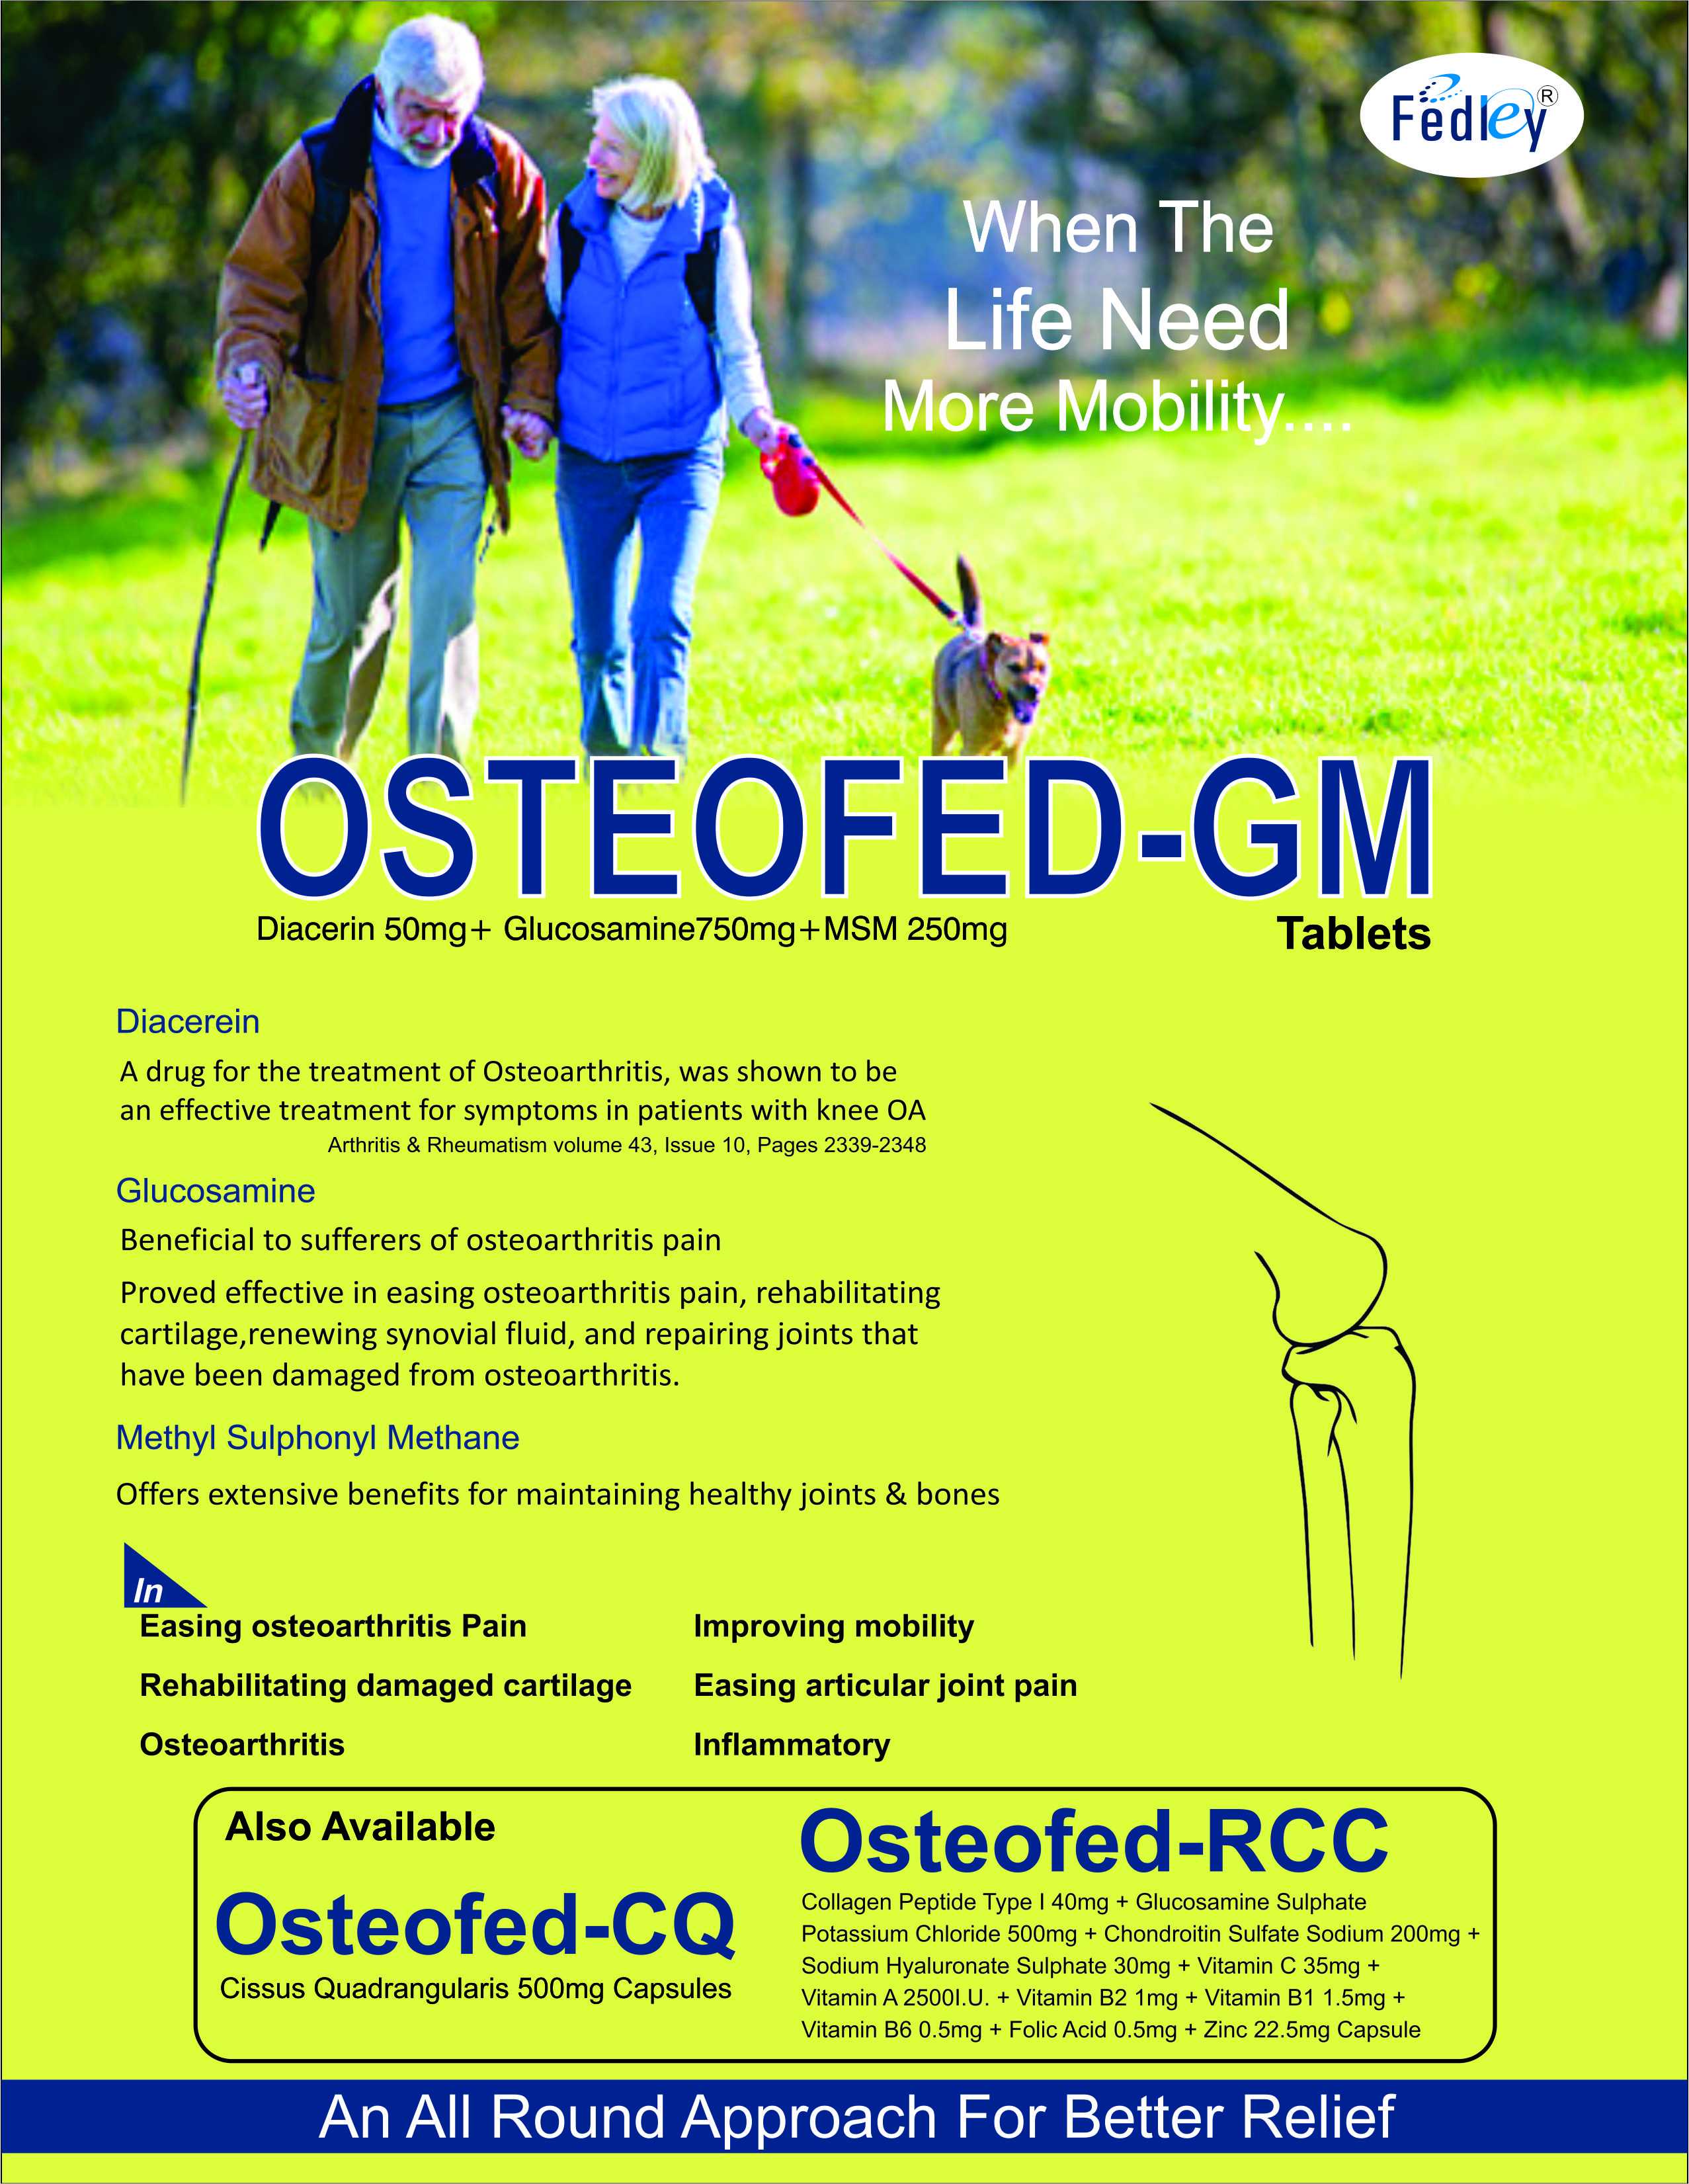 OSTEOFED-RCC